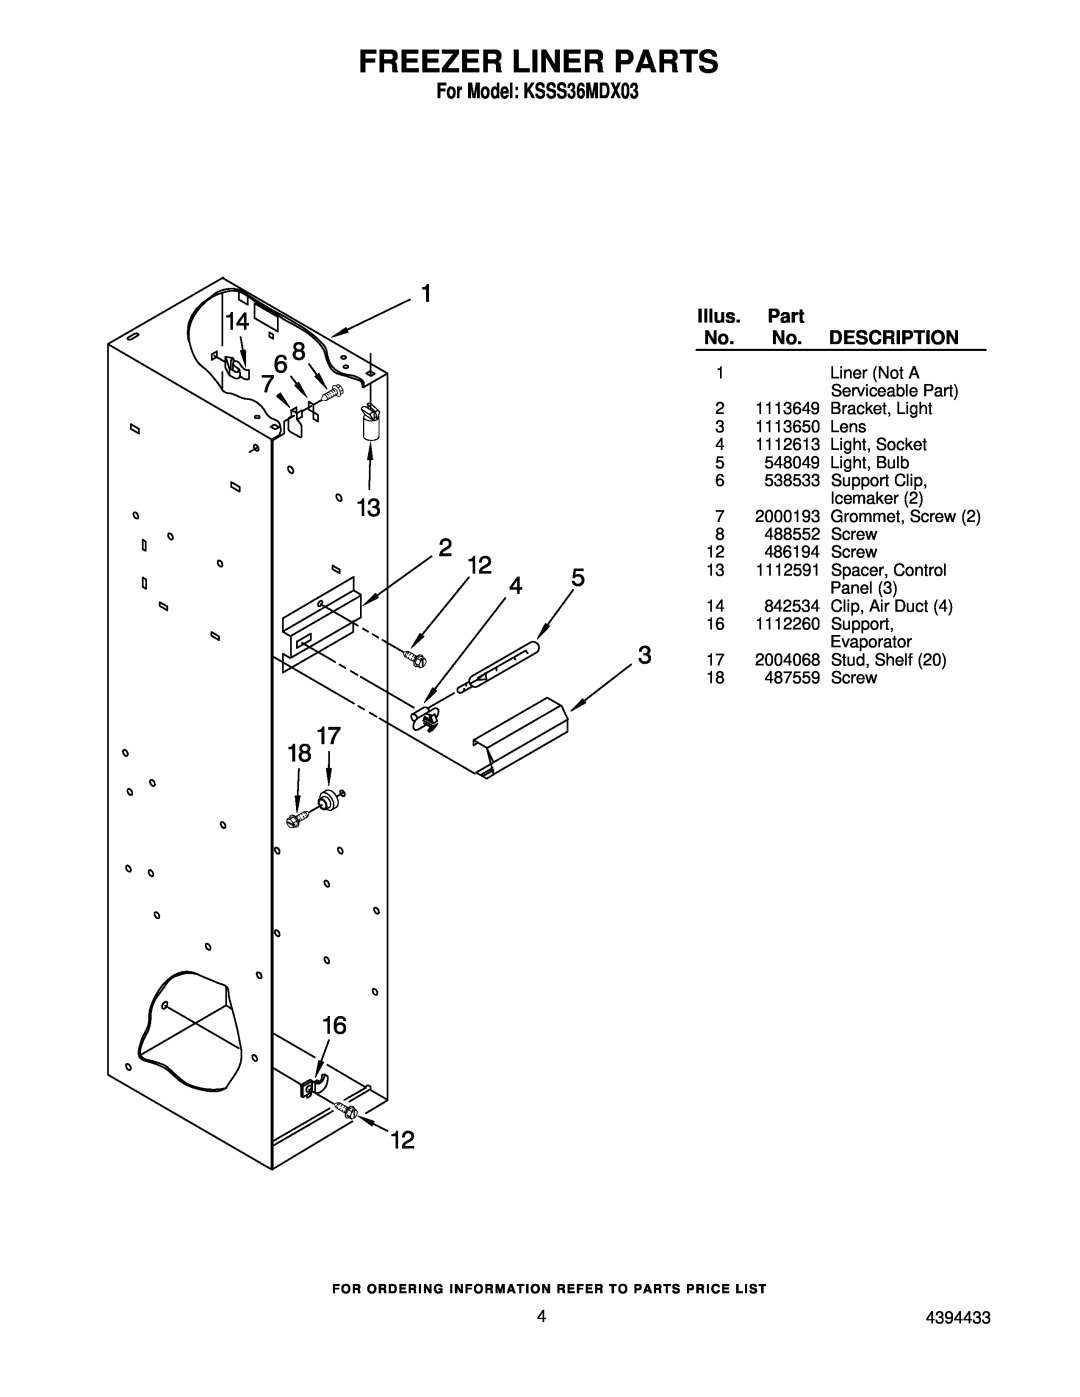 KitchenAid manual Freezer Liner Parts, For Model KSSS36MDX03, Illus, Description 